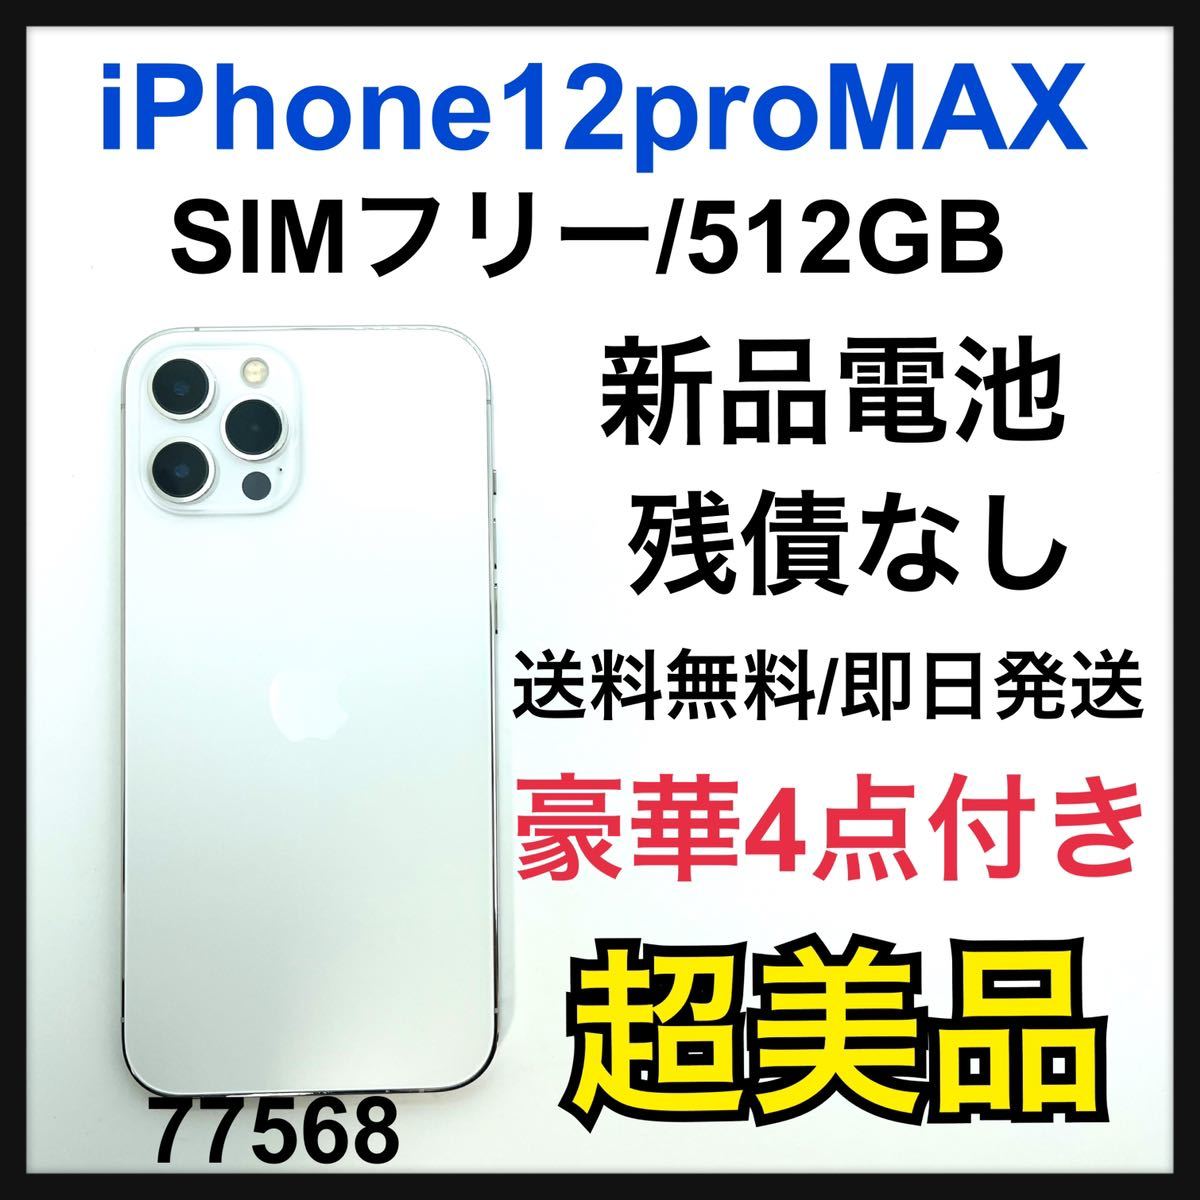 S iPhone 12 Pro Max シルバー 512 GB SIMフリー スマホ スマホ www